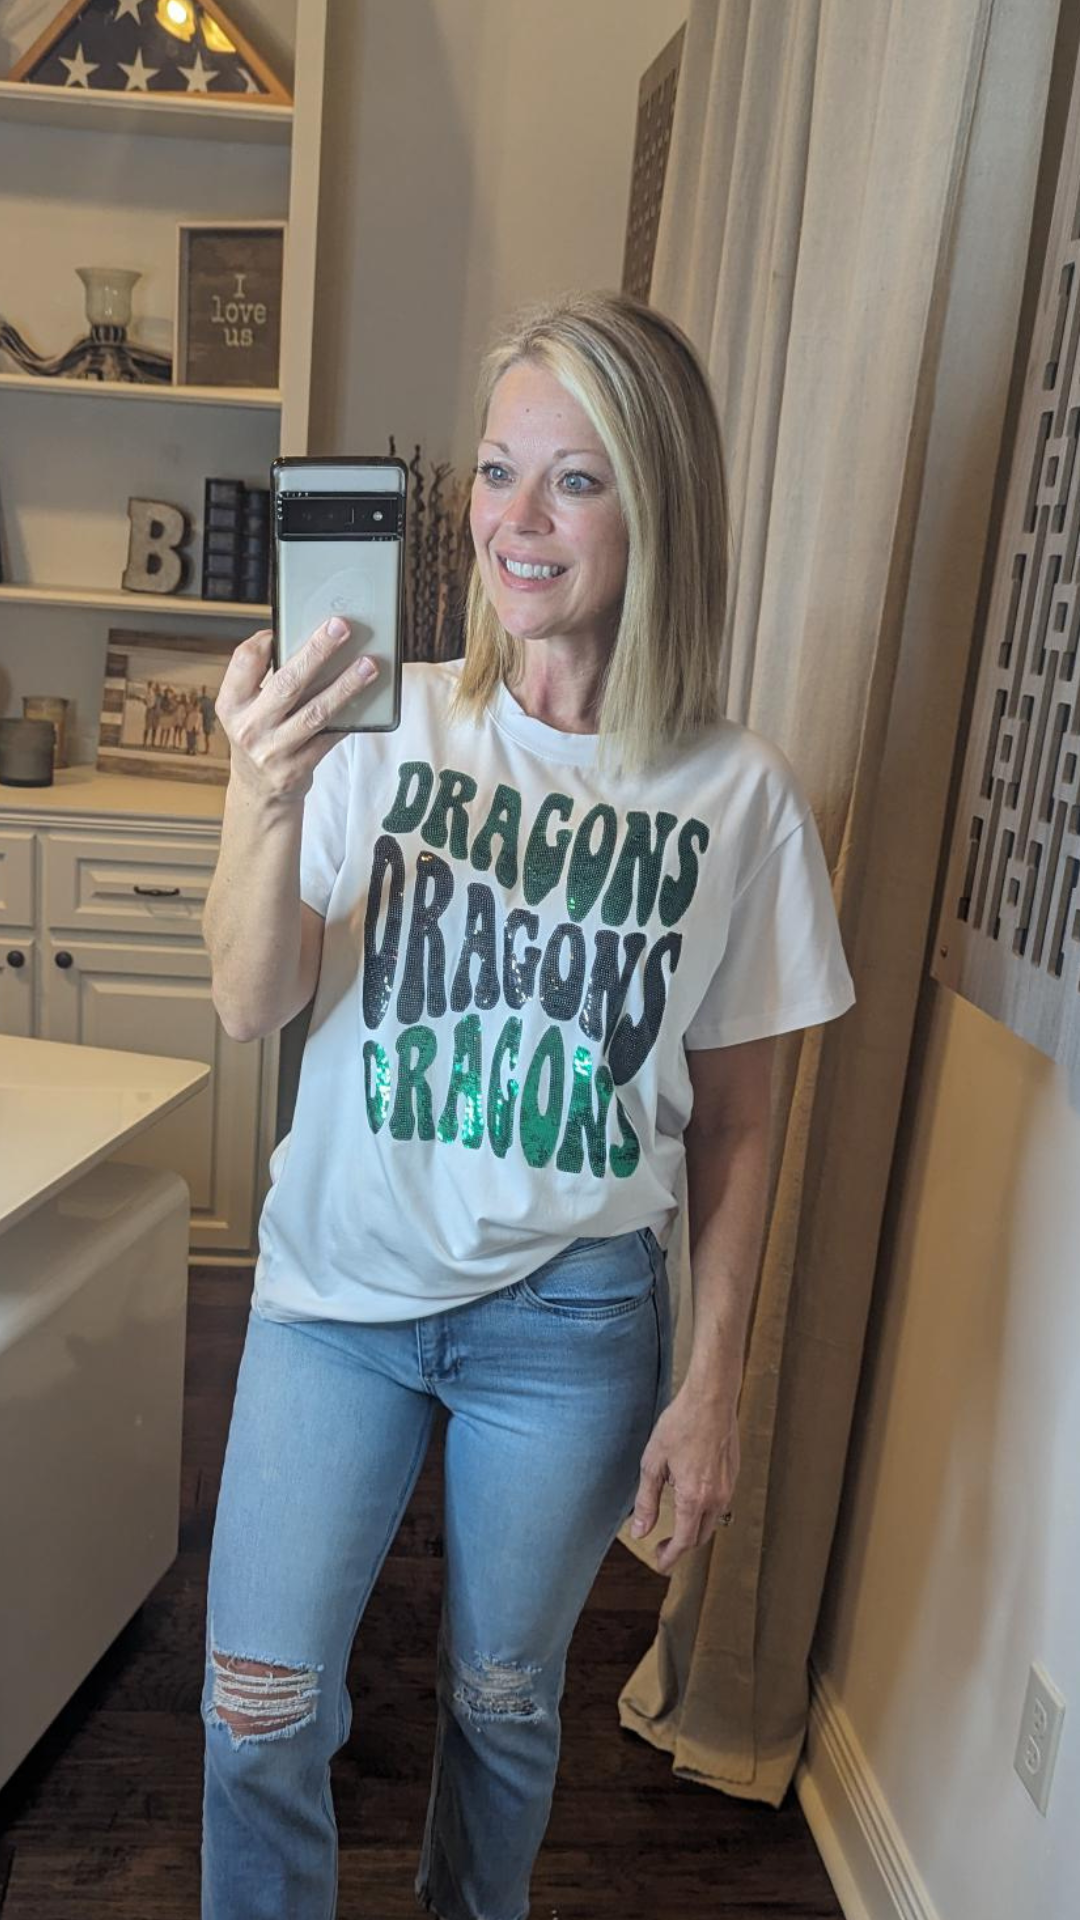 Groovy Dragons | Women's Sequin Design Tee (White)